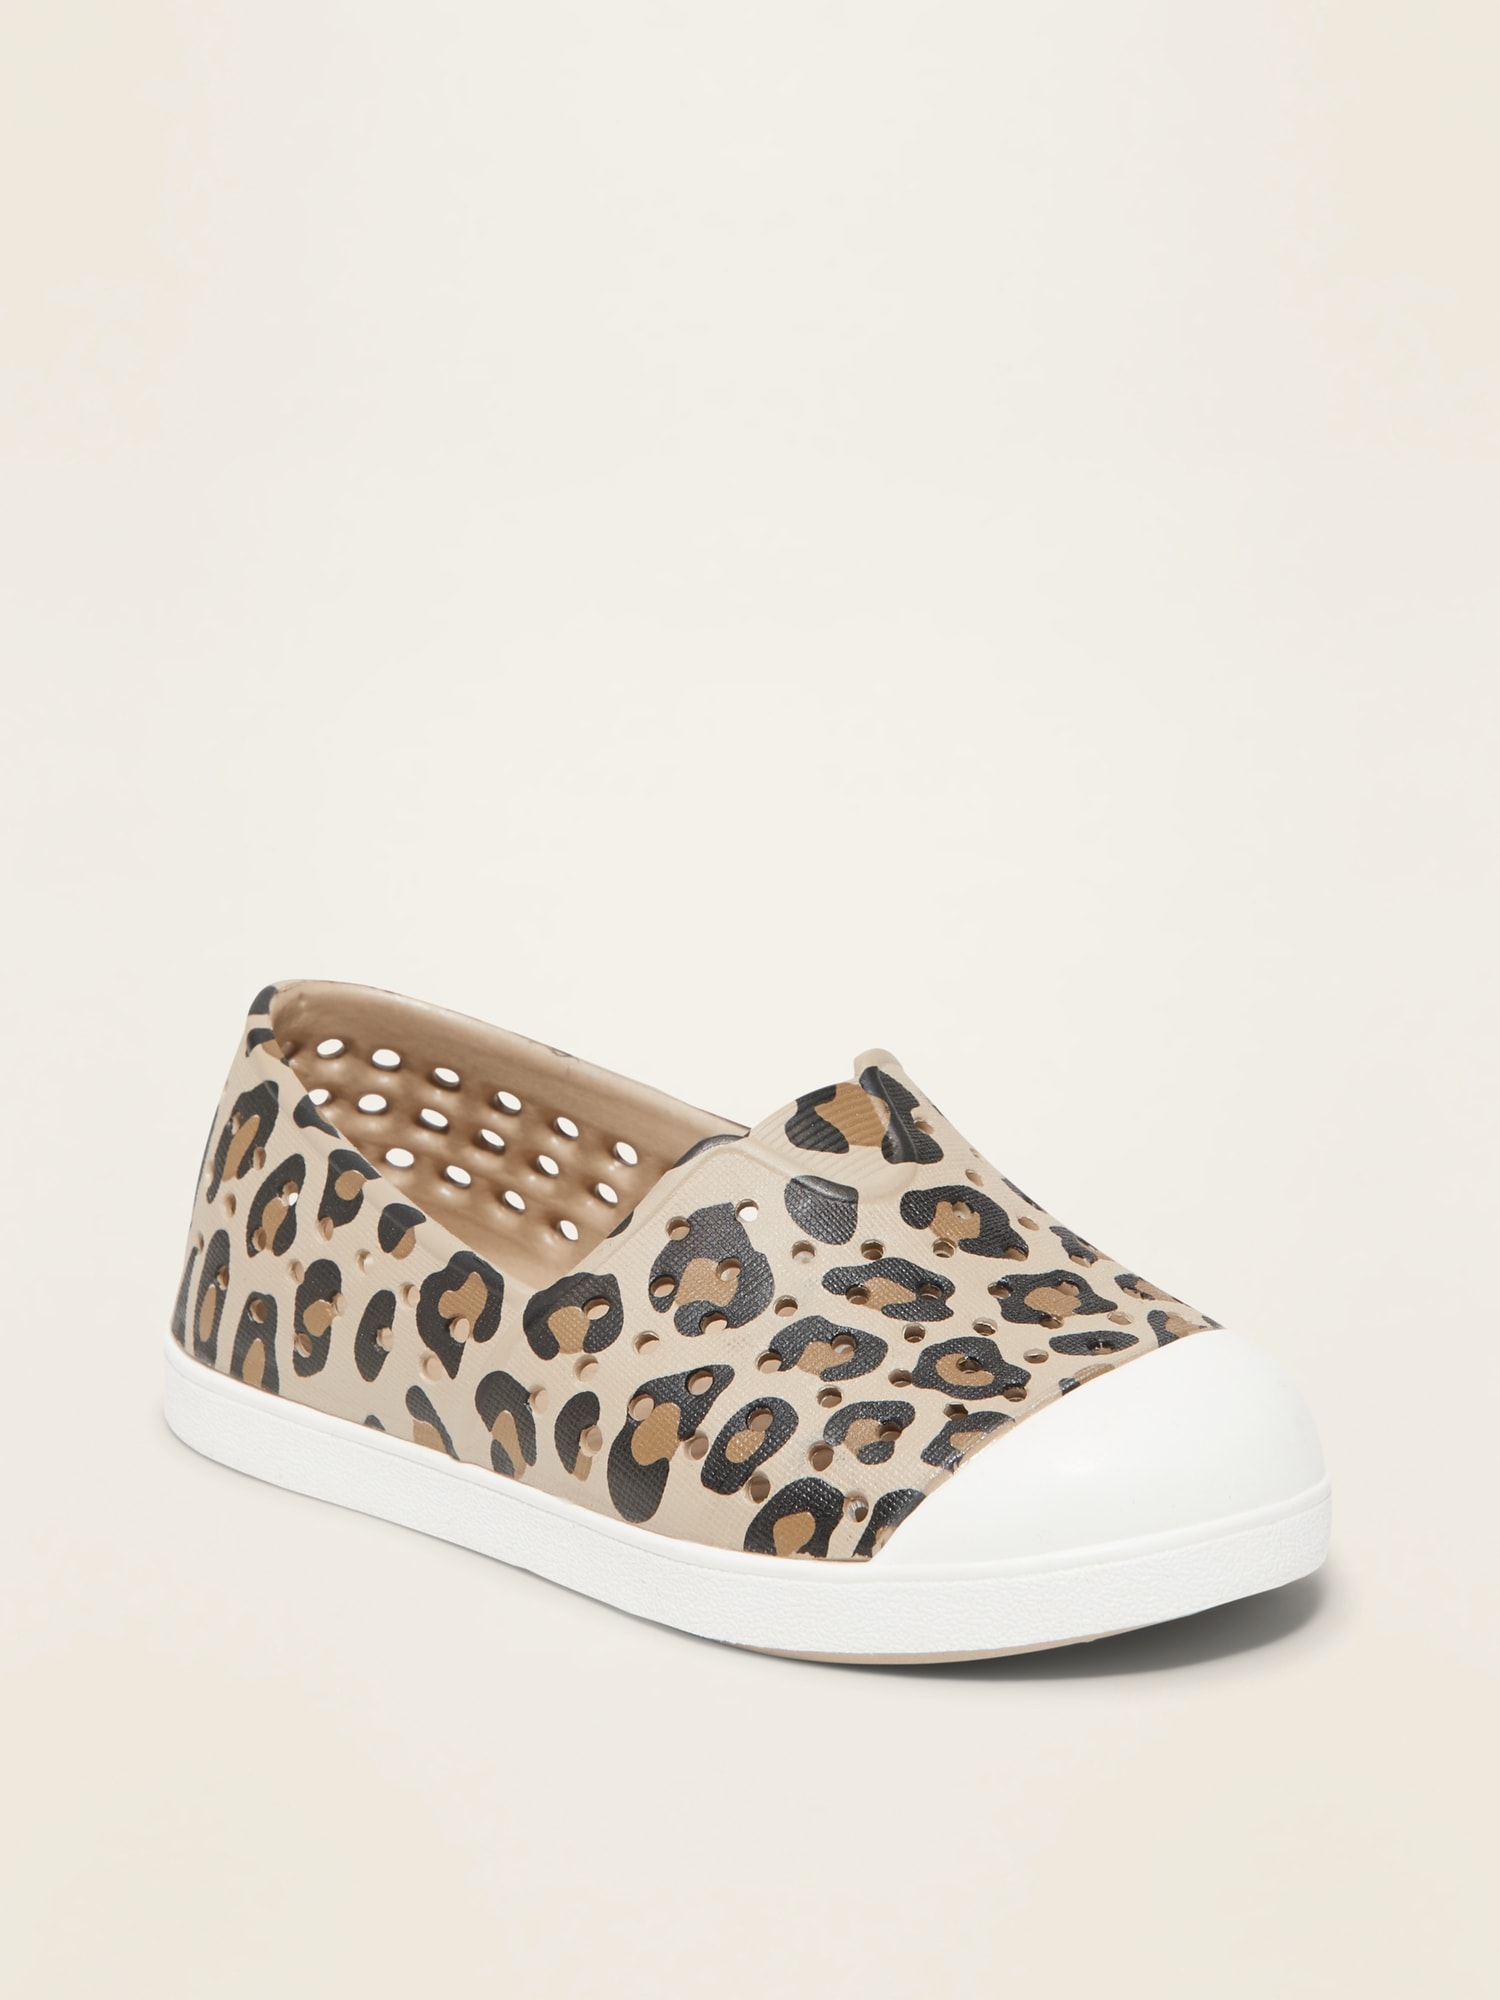 gap leopard sandals